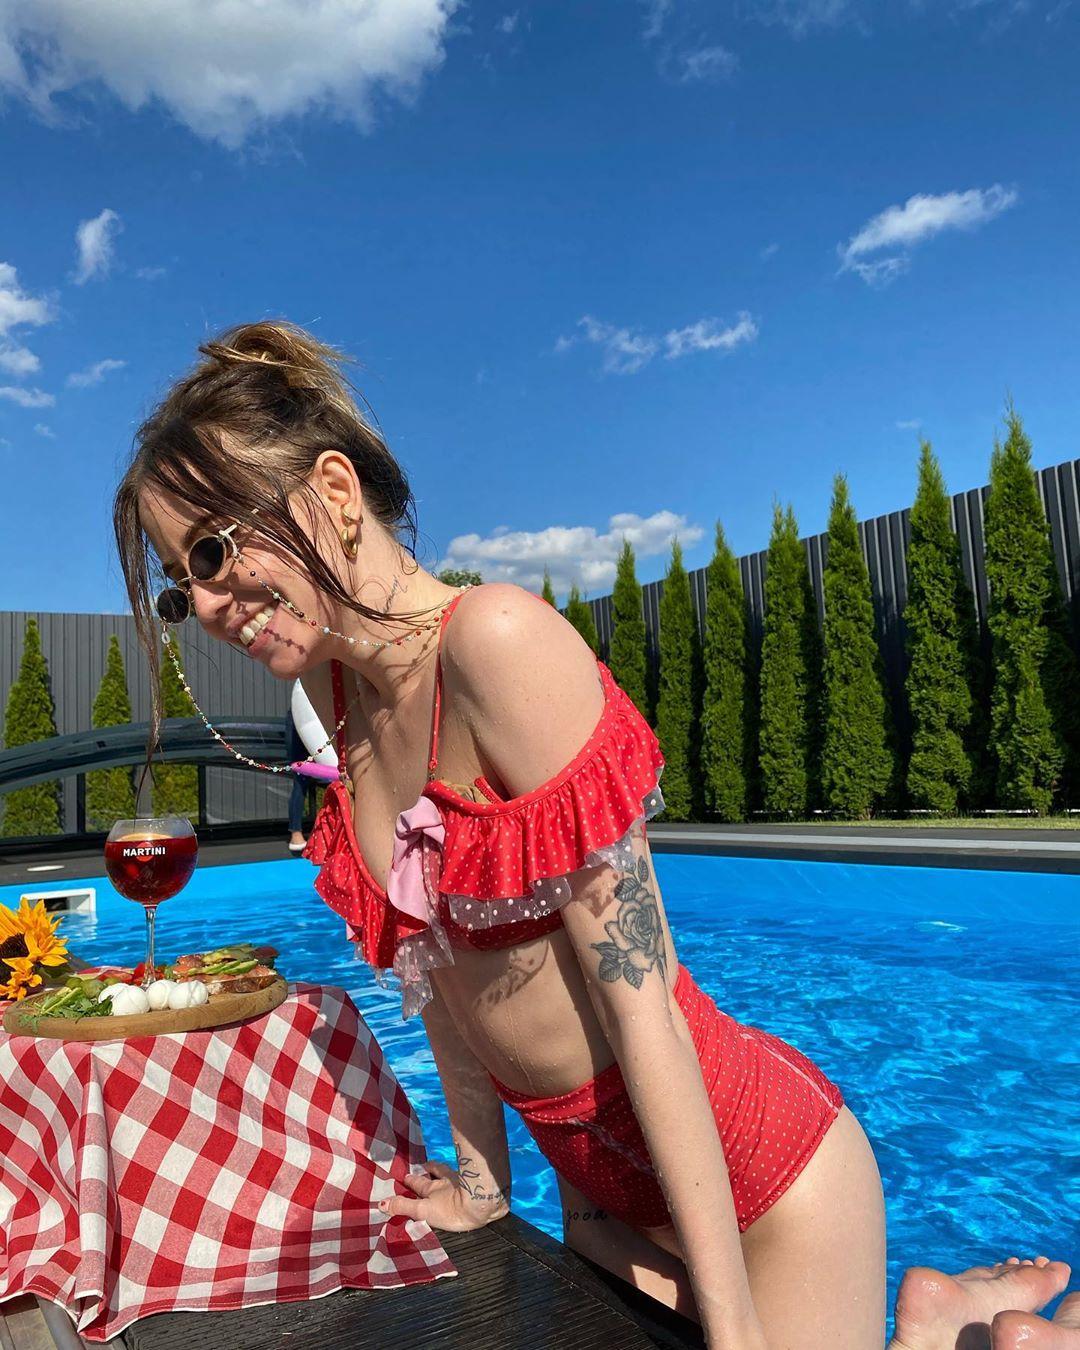 Певица поплавала на огромном надувном единороге / Instagram Надя Дорофеева